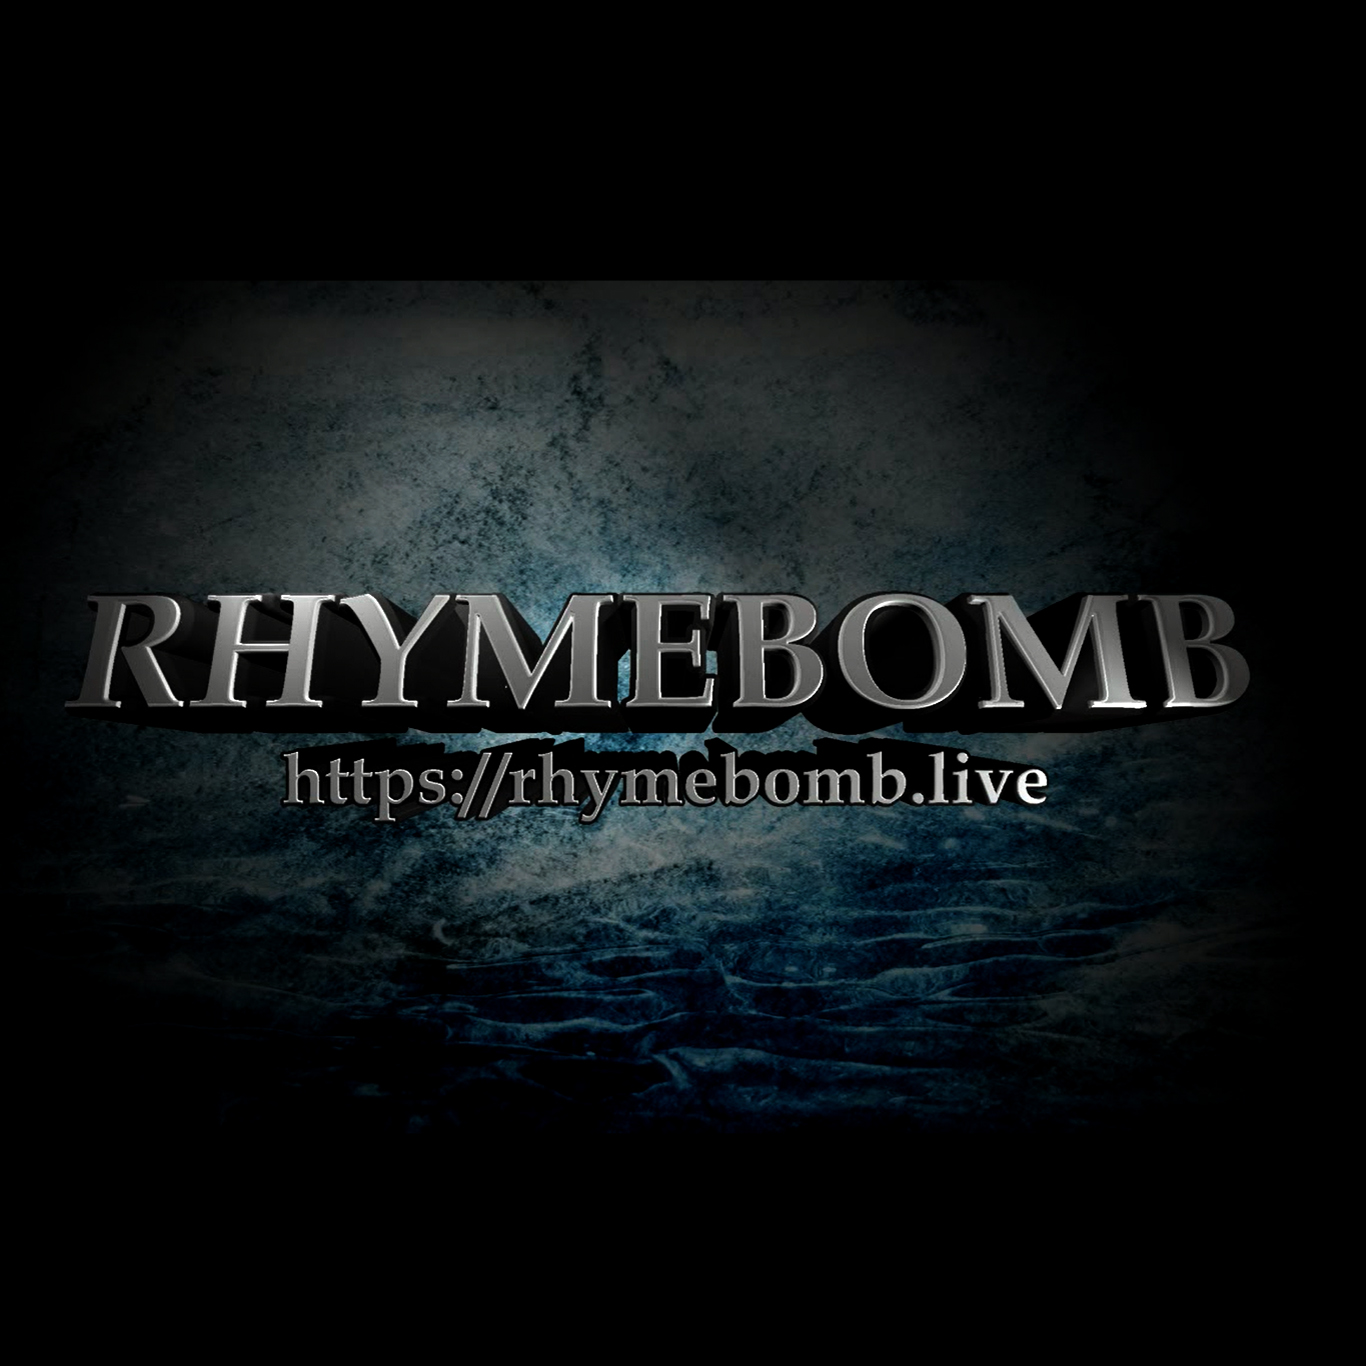 RhymeBomb.Live